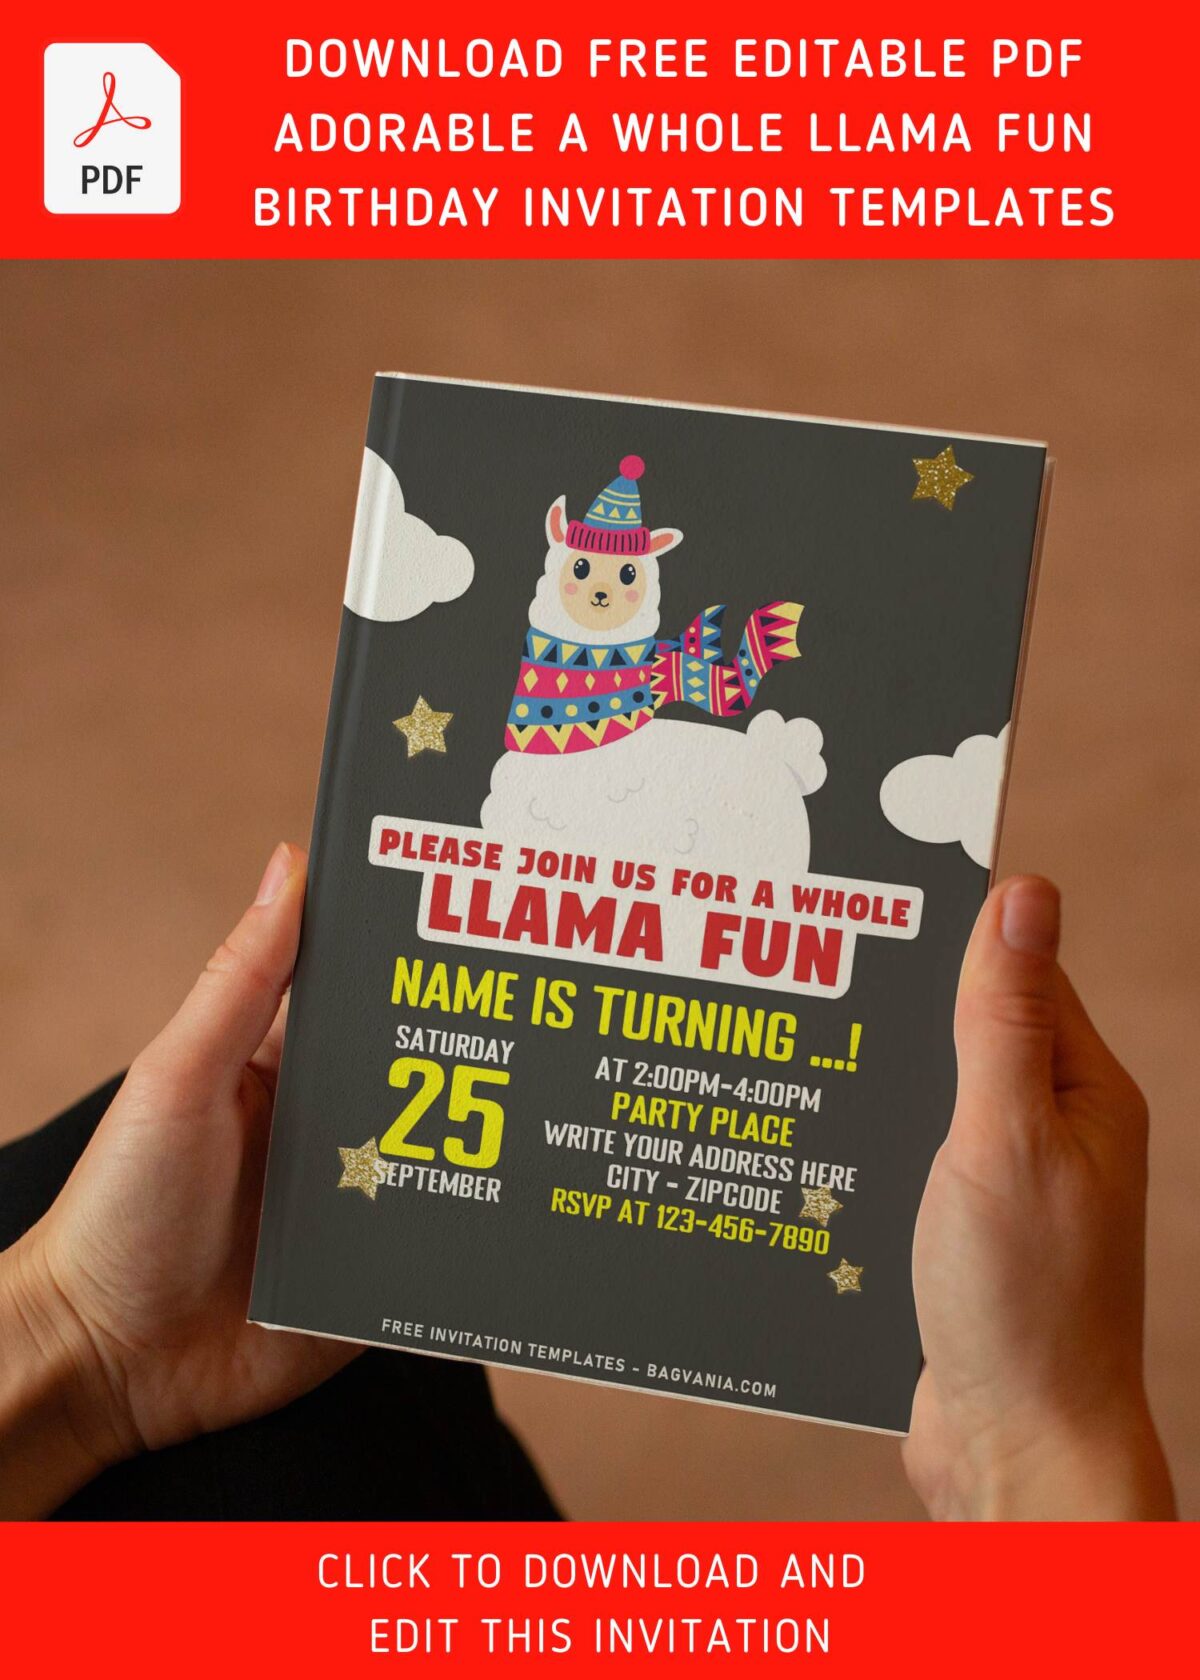 (Free Editable PDF) Super Cute Llama Party-Rama Birthday Invitation Templates with adorable Llama wearing colorful boho scarf